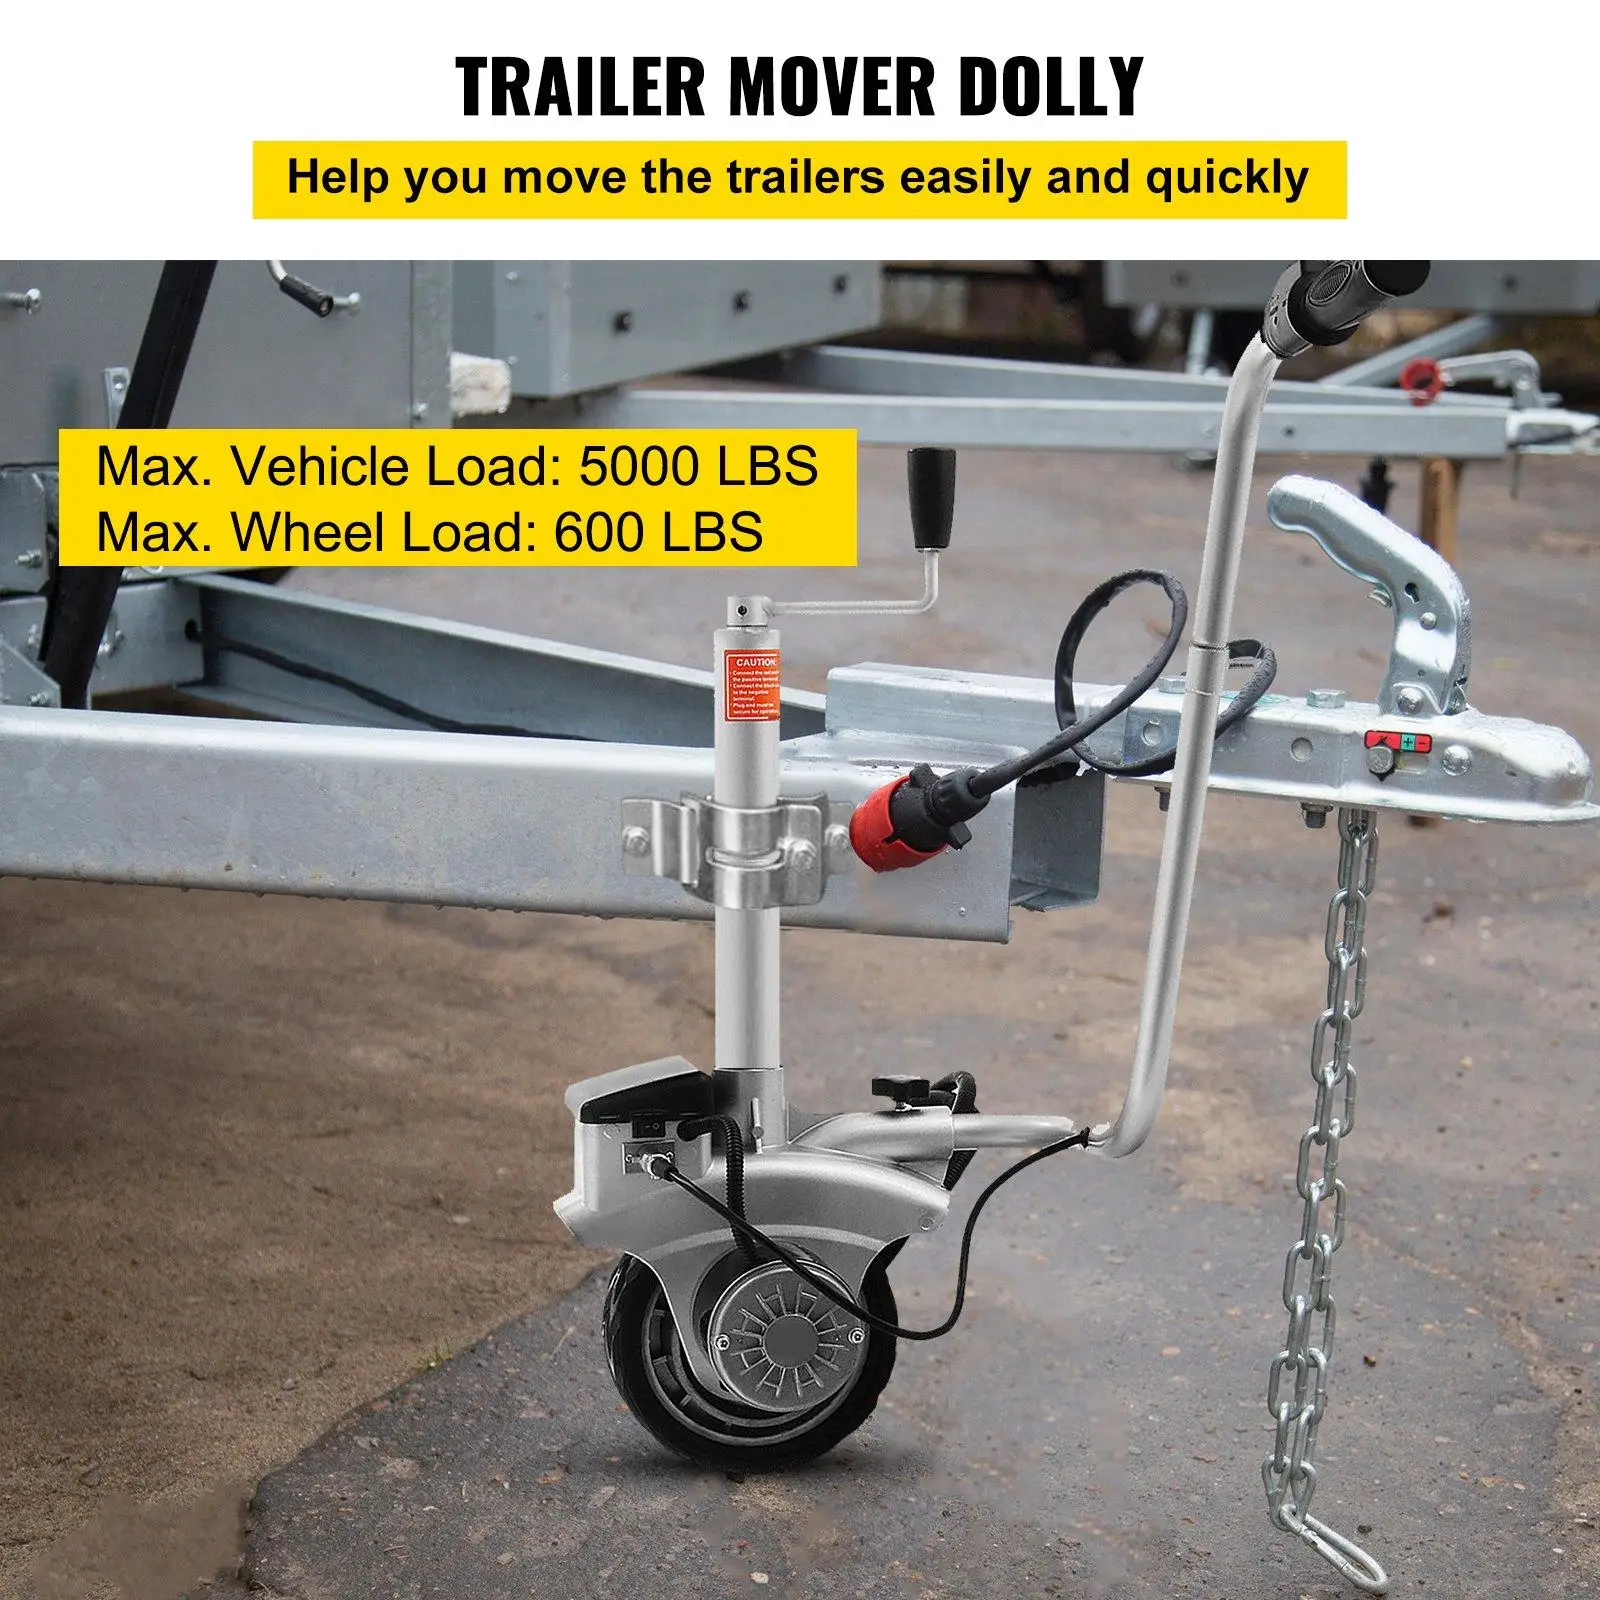 VEVOR trailer mover dolly